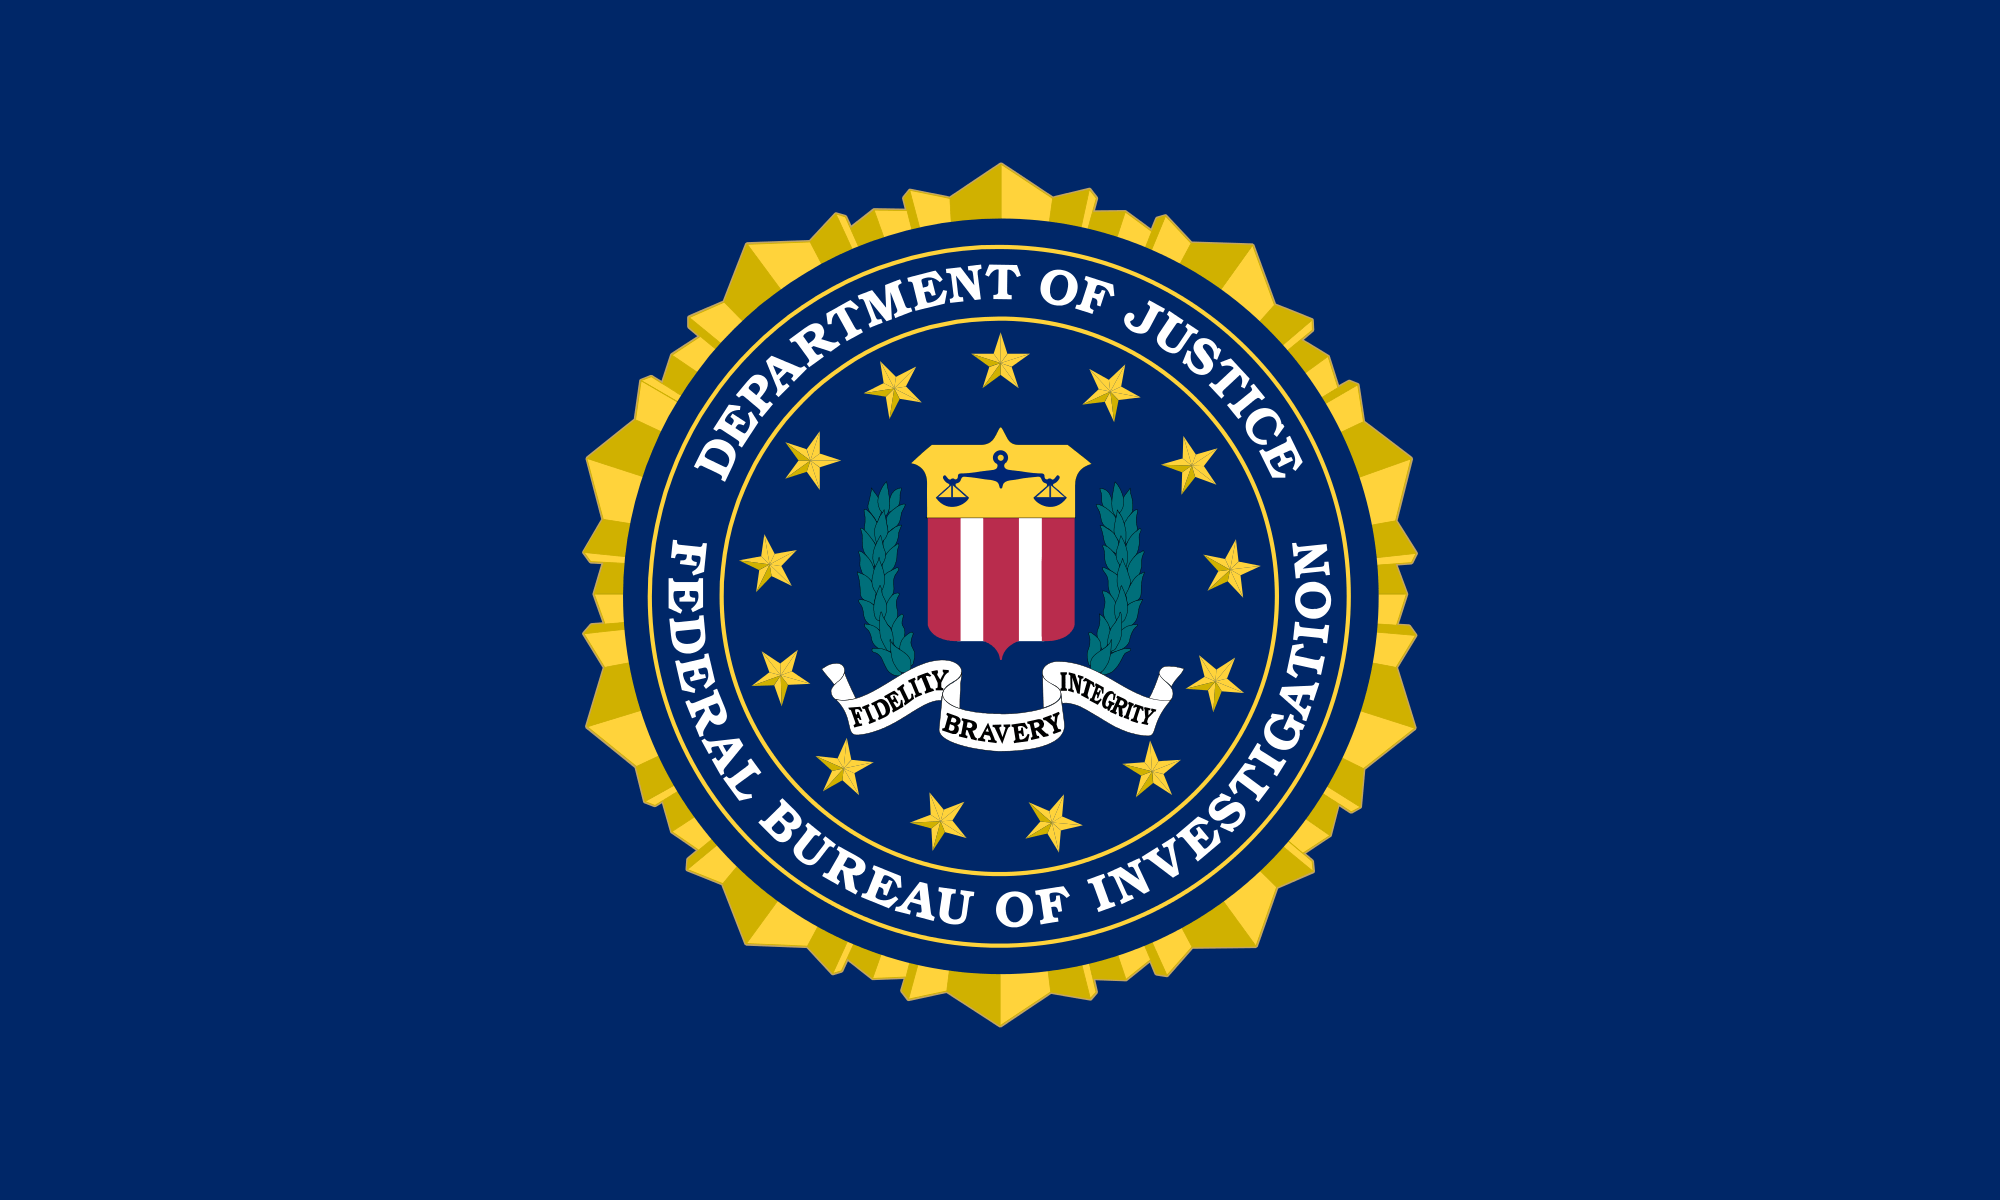 Special Agent Federal Bureau of Investigation (FBI)